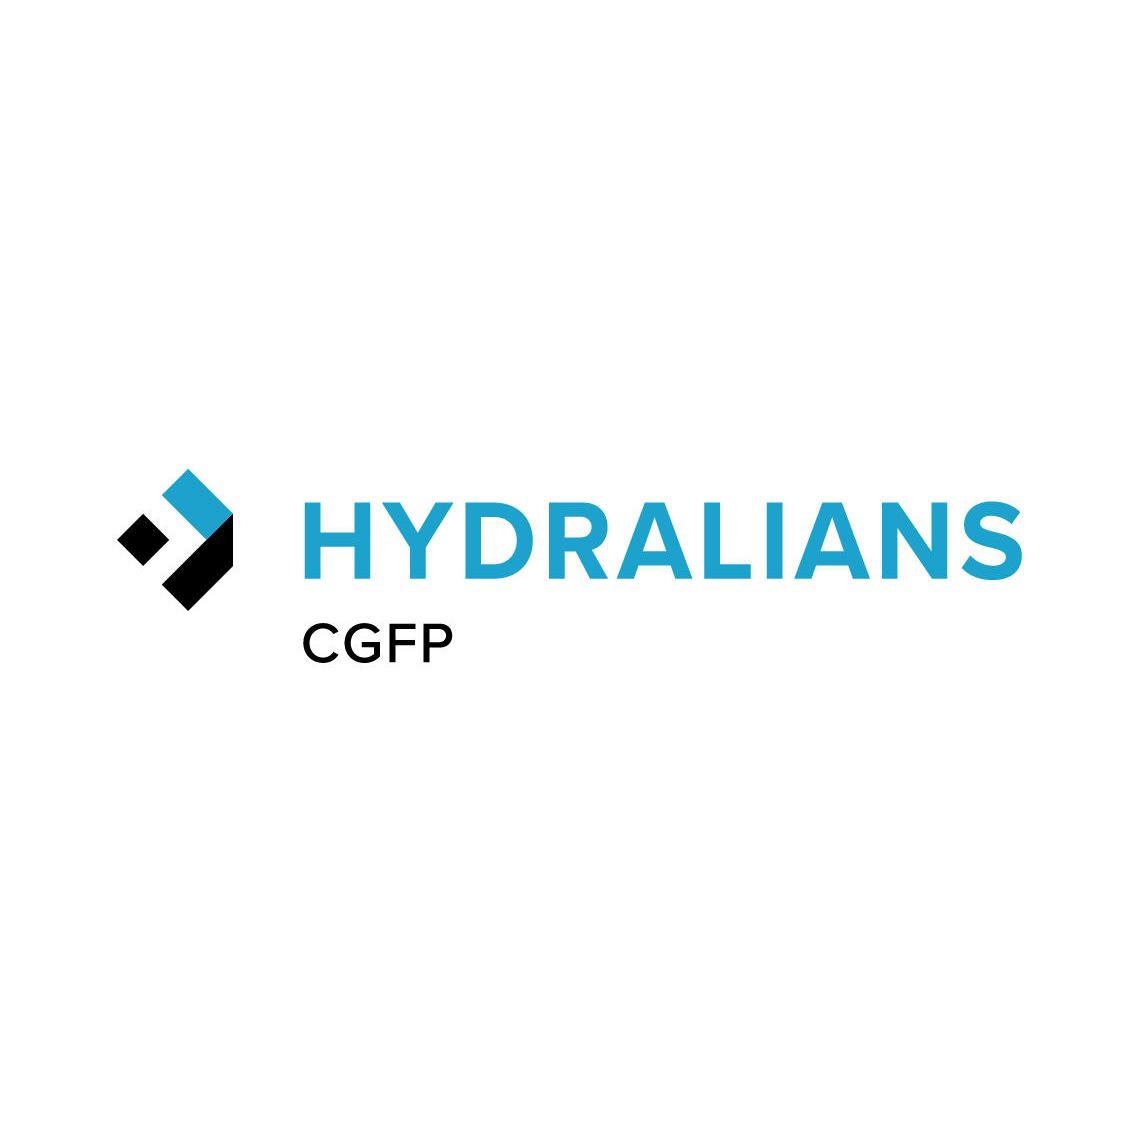 HYDRALIANS CGFP